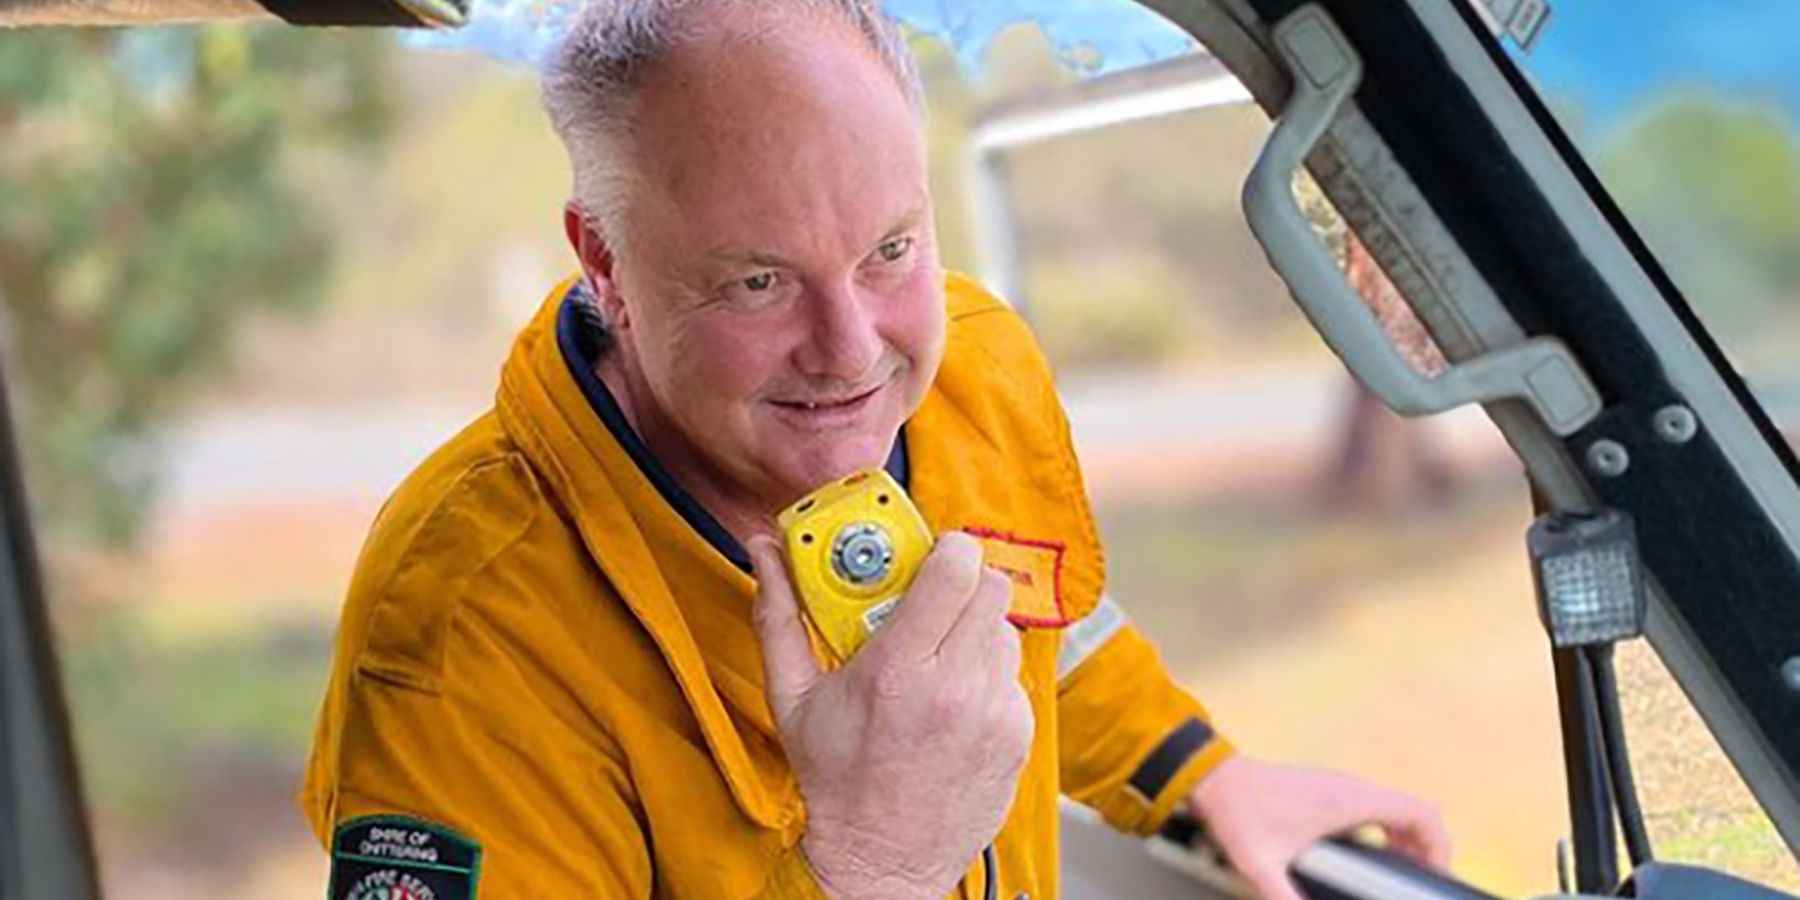 A bushfire volunteer in uniform speaking on his CB radio